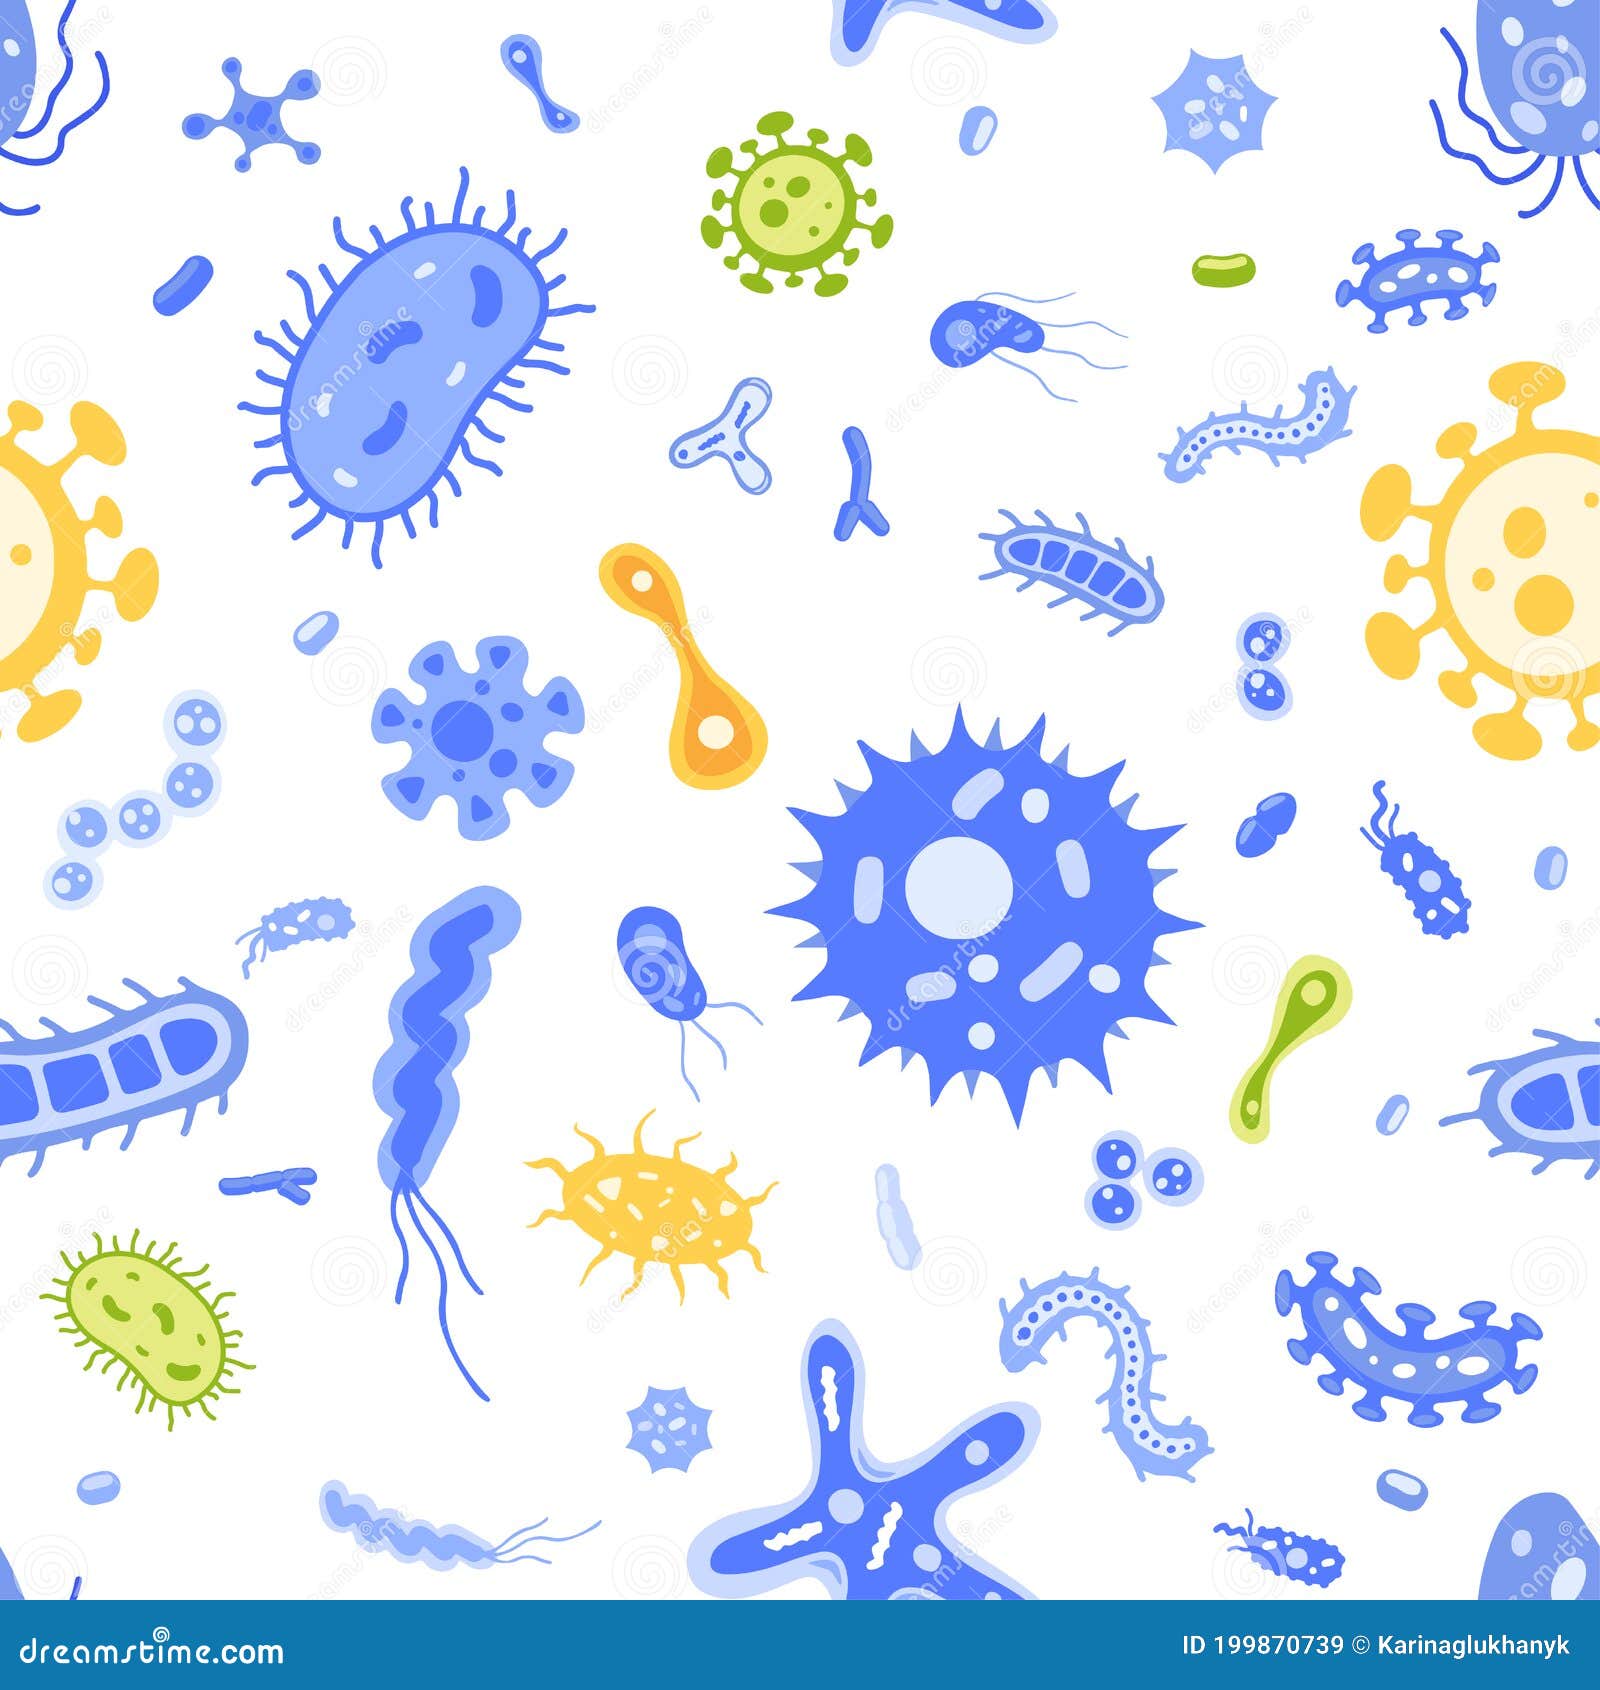 Vector Seamless Pattern: Flat Virus and Microbe Illustrations ...